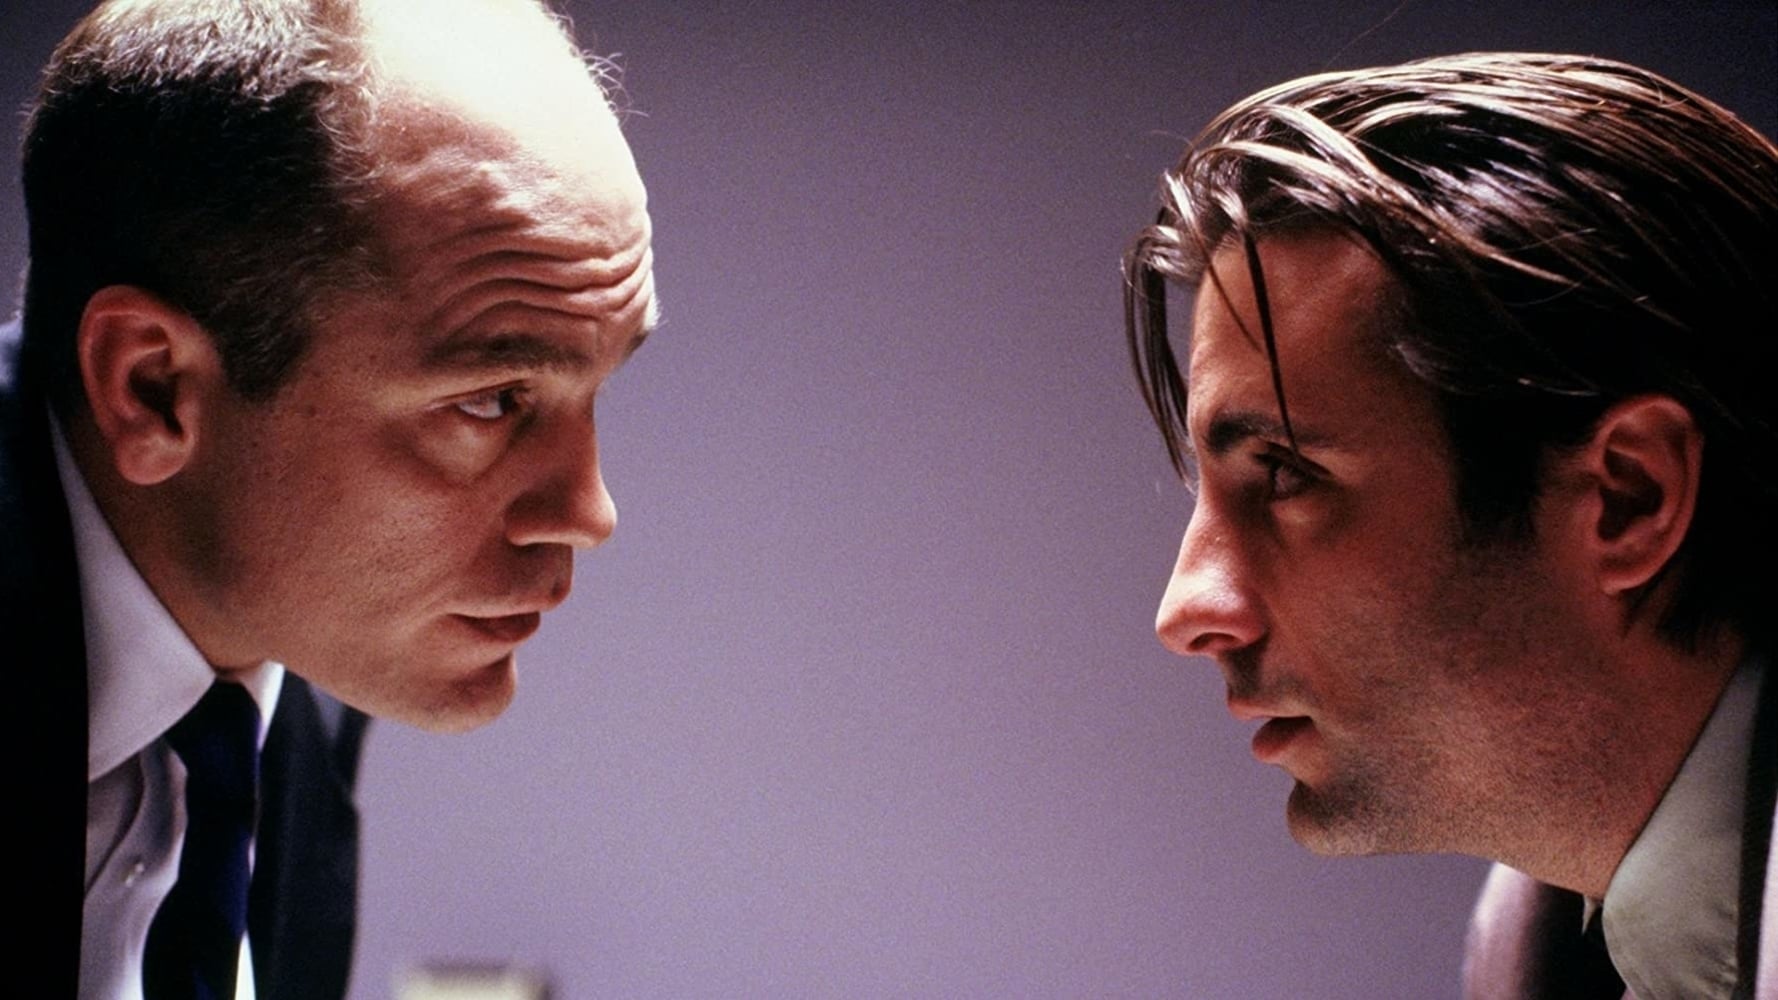 Internal Affairs investigator John Malkovich and Andy Garcia in Jennifer Eight (1992)